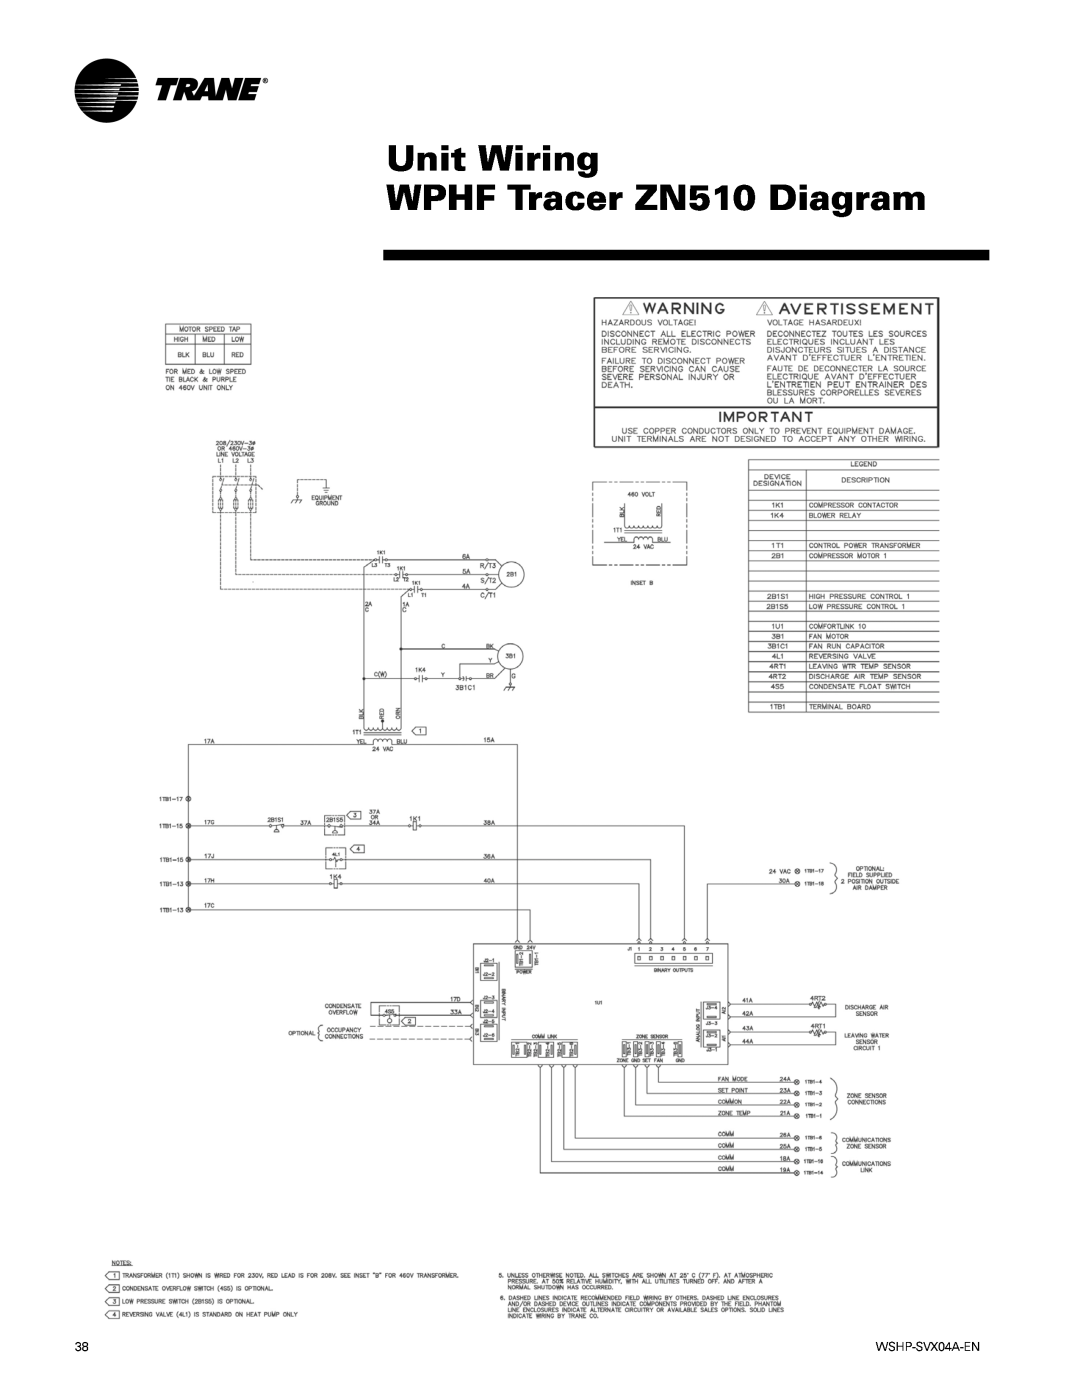 Trane WPVJ manual Unit Wiring WPHF Tracer ZN510 Diagram, WSHP-SVX04A-EN 